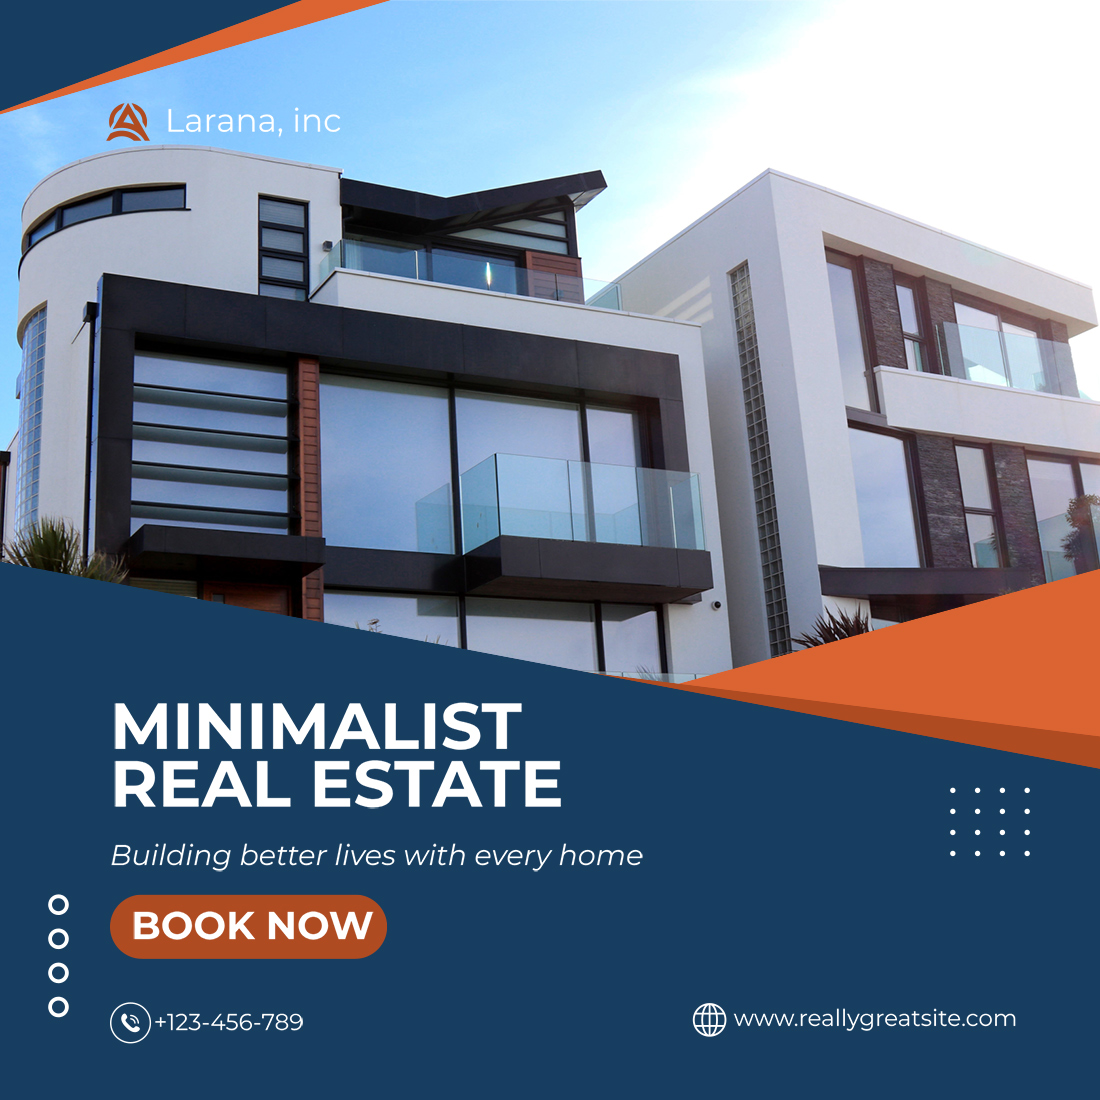 Blue and Orange Minimalist Real Estate Promotion Instagram Post cover image.